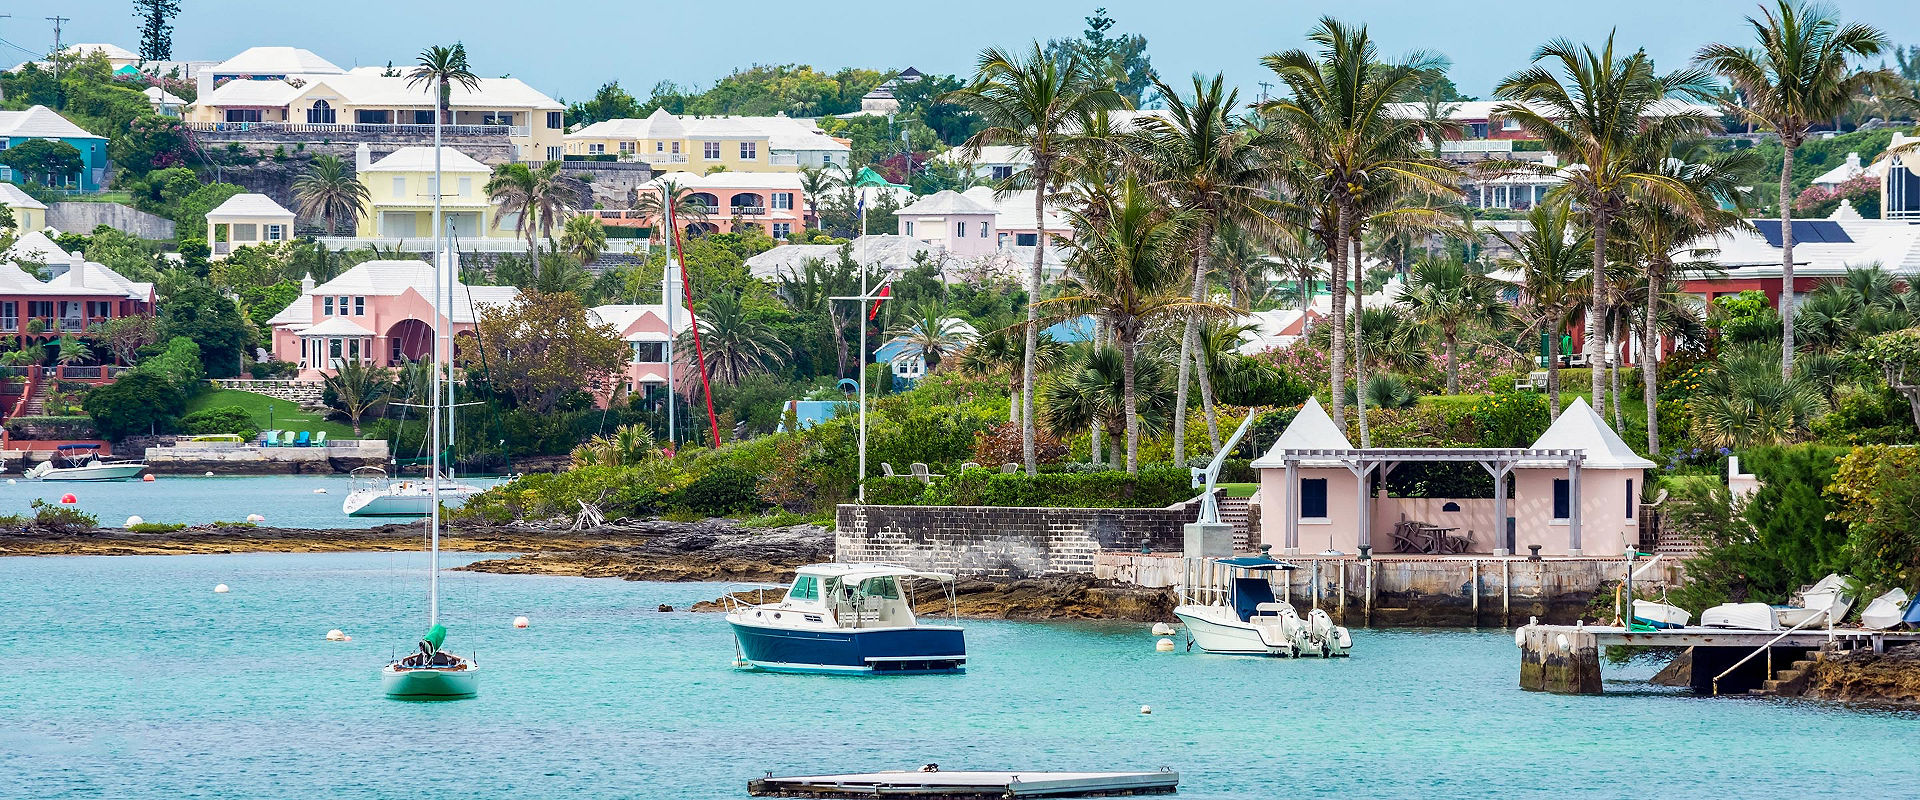 royal caribbean cruises bermuda